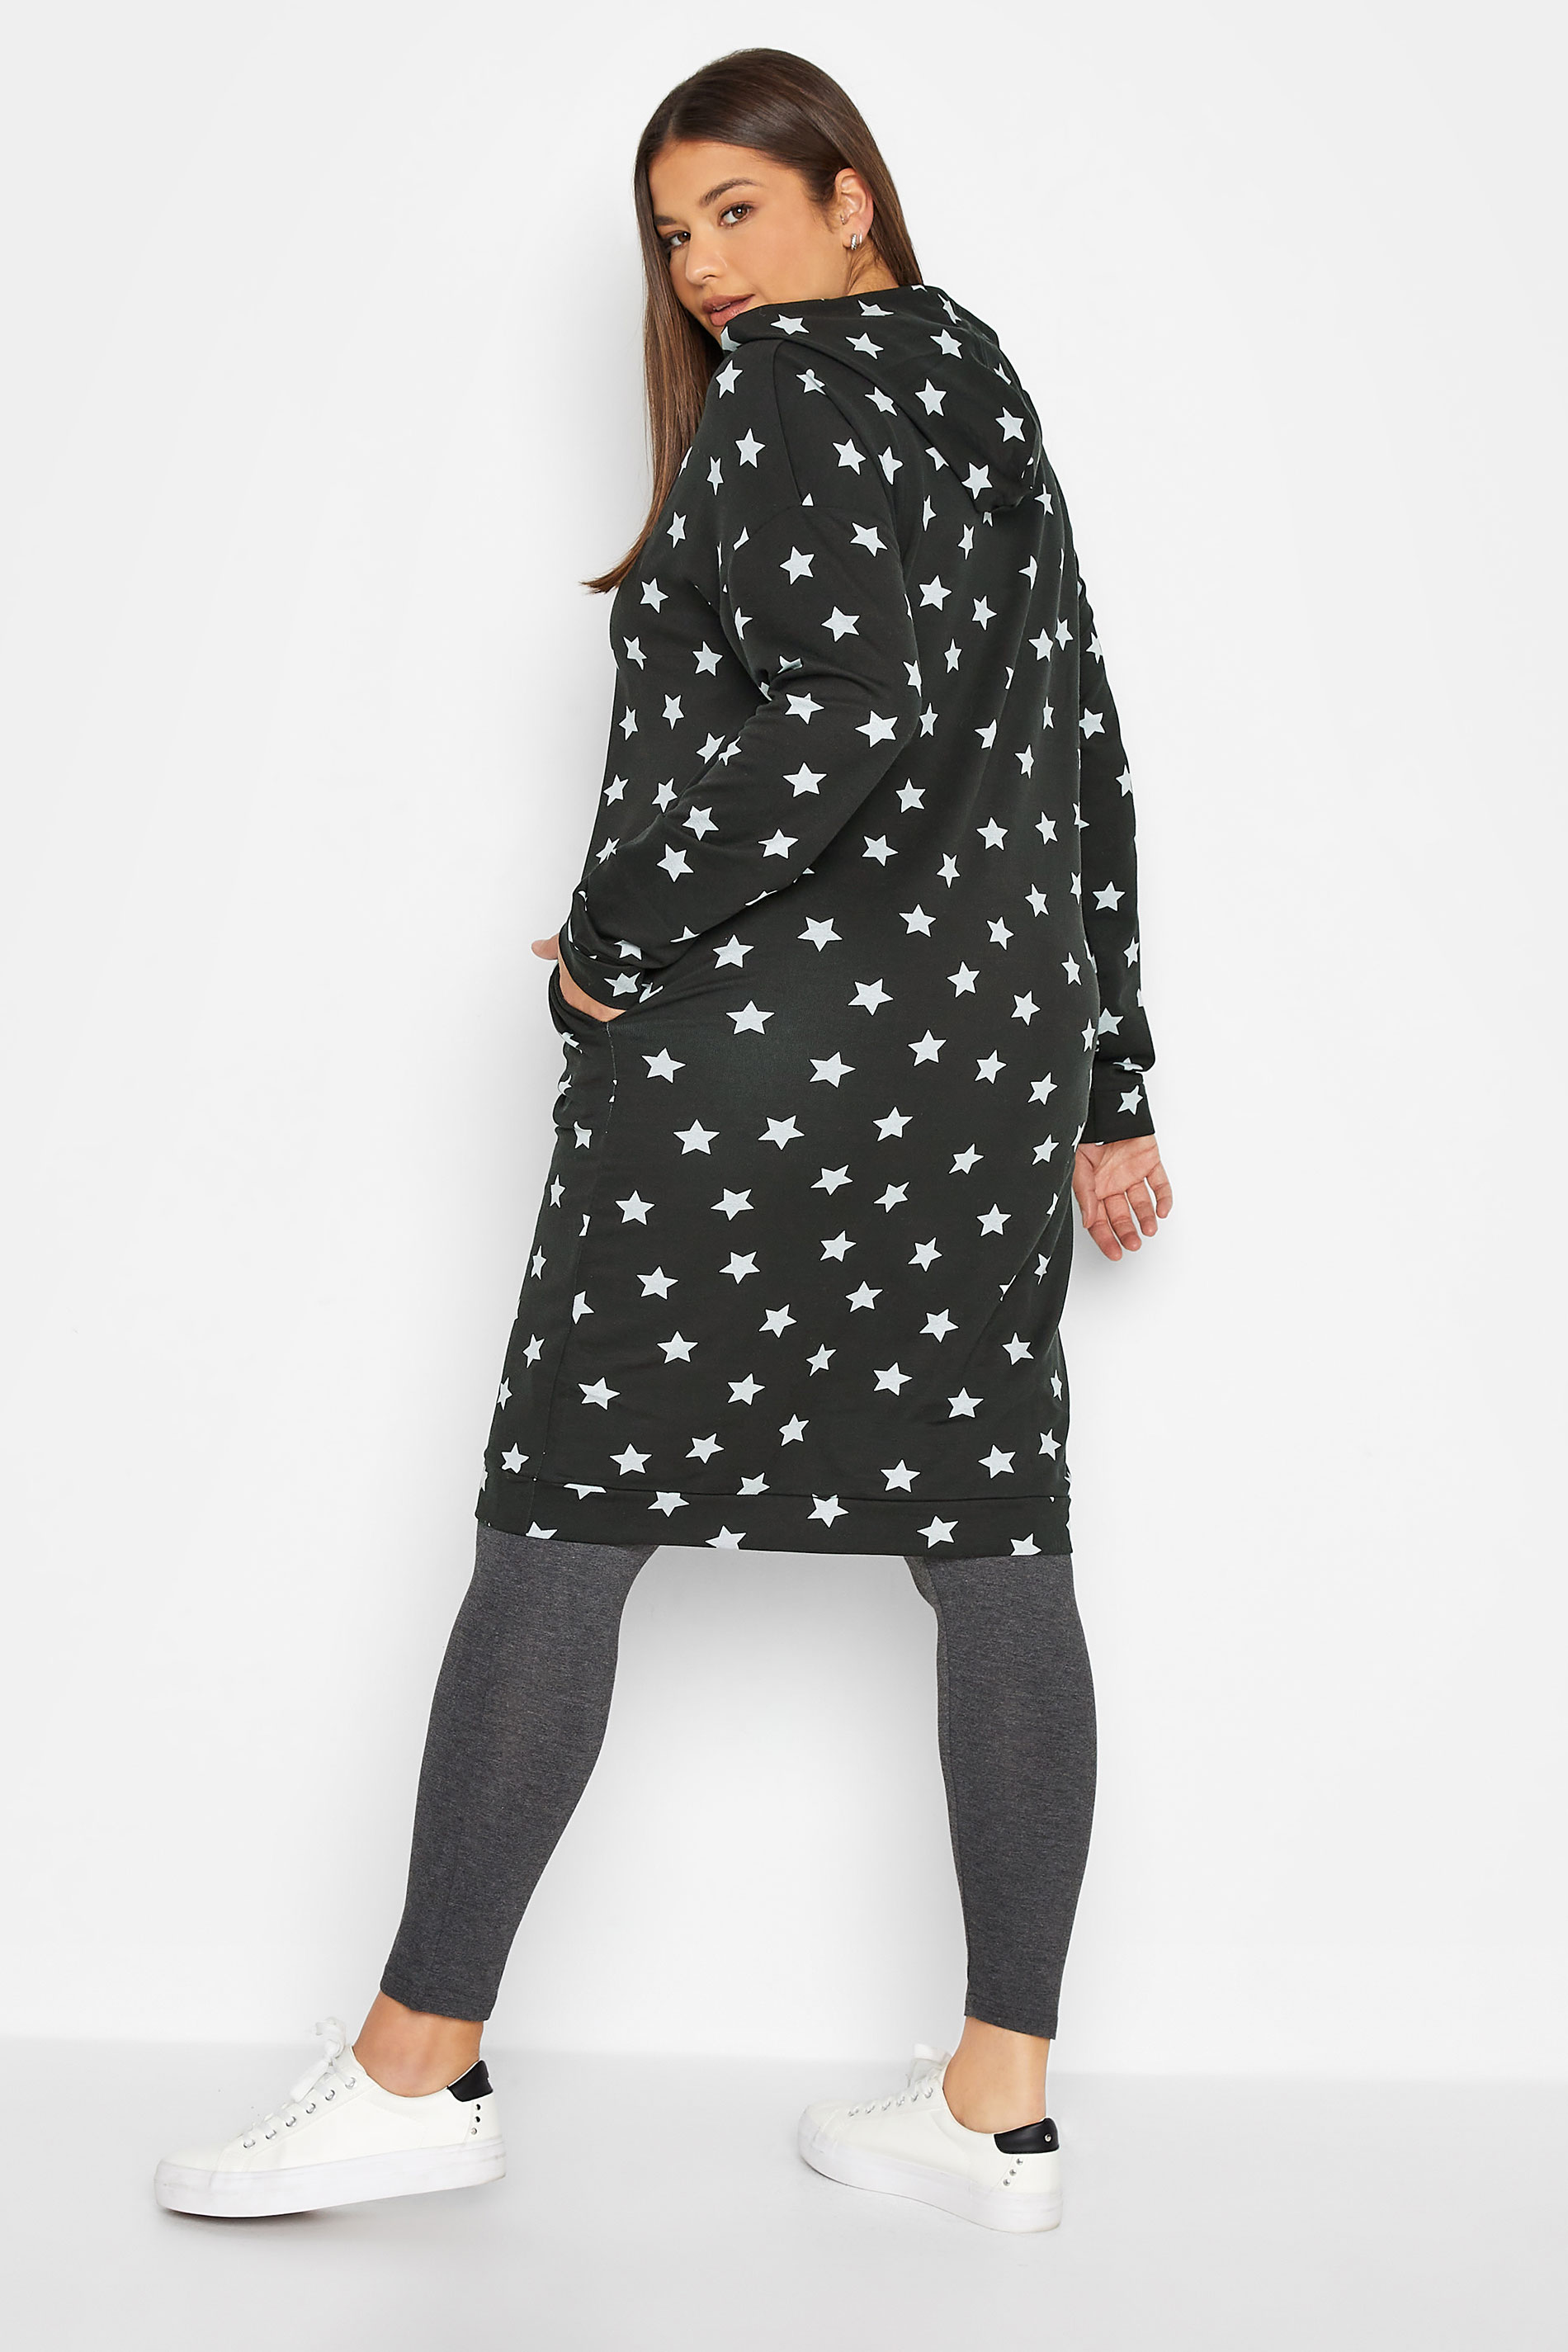 Tall Women's LTS Black Star Print Hoodie Dress | Long Tall Sally 3